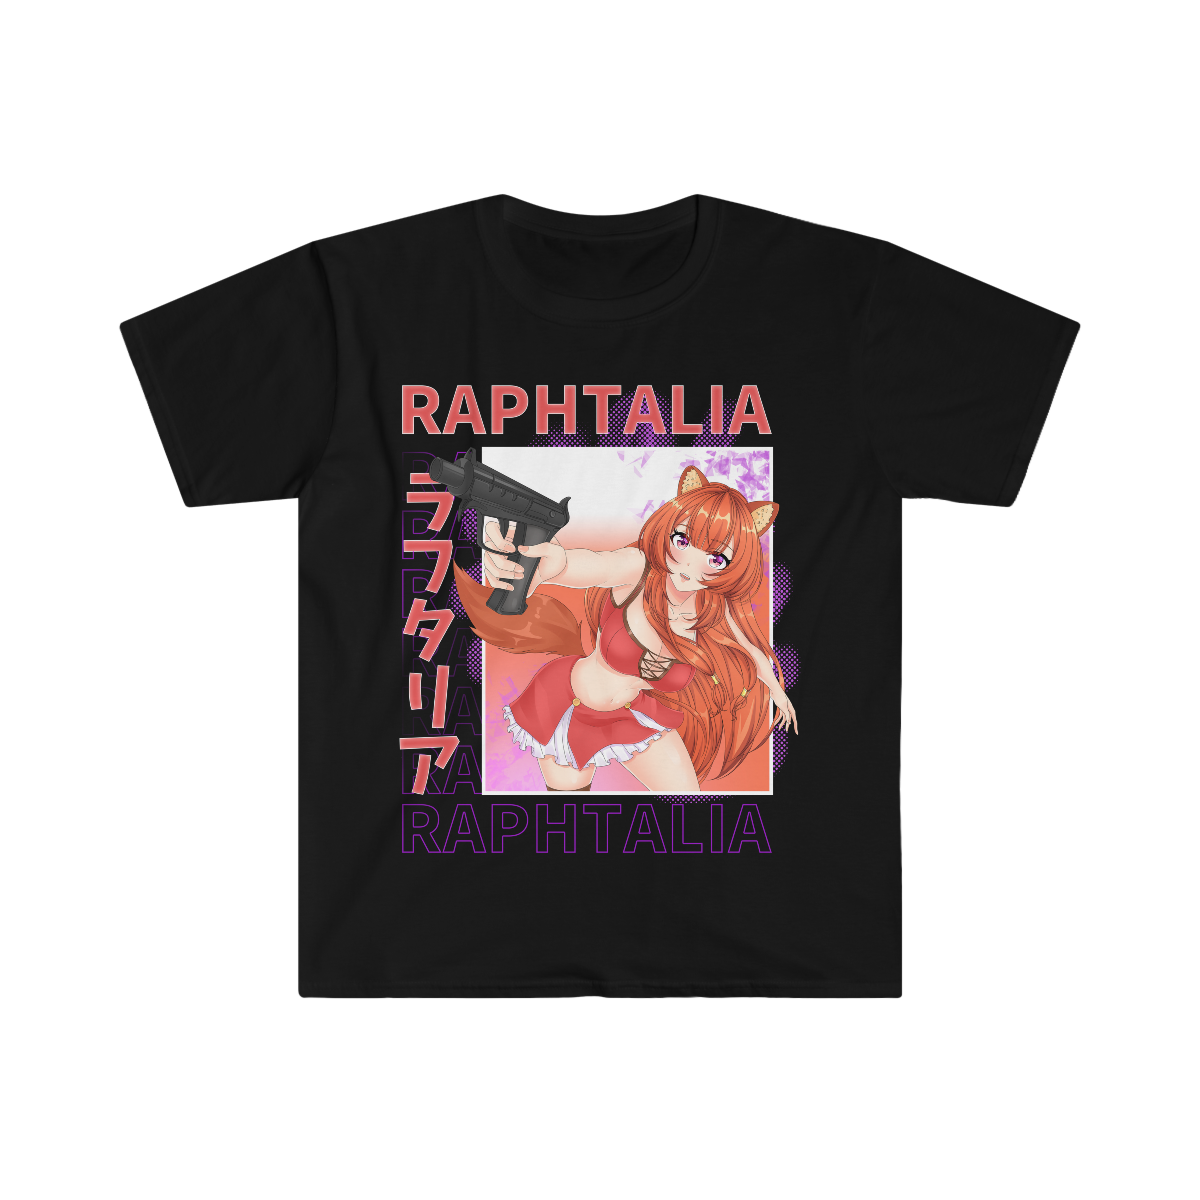 Armed Raphtalia T-Shirt